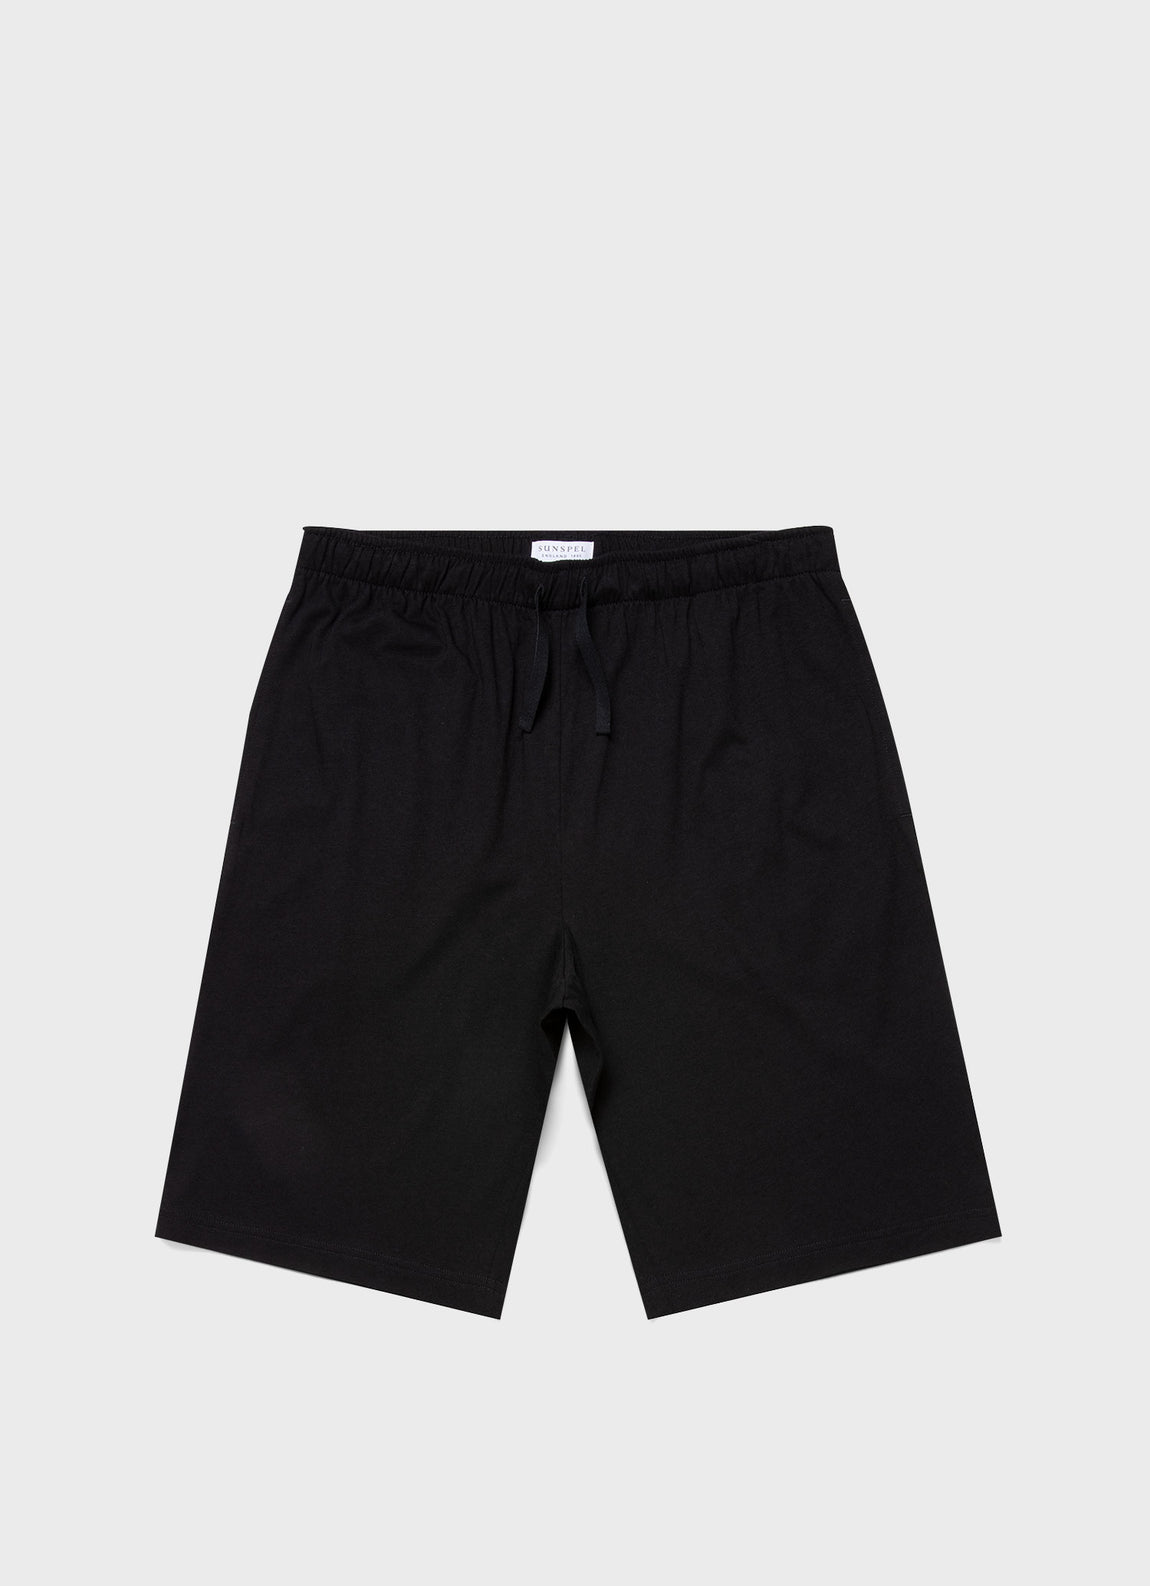 Men's Cotton Modal Lounge Shorts in Black | Sunspel